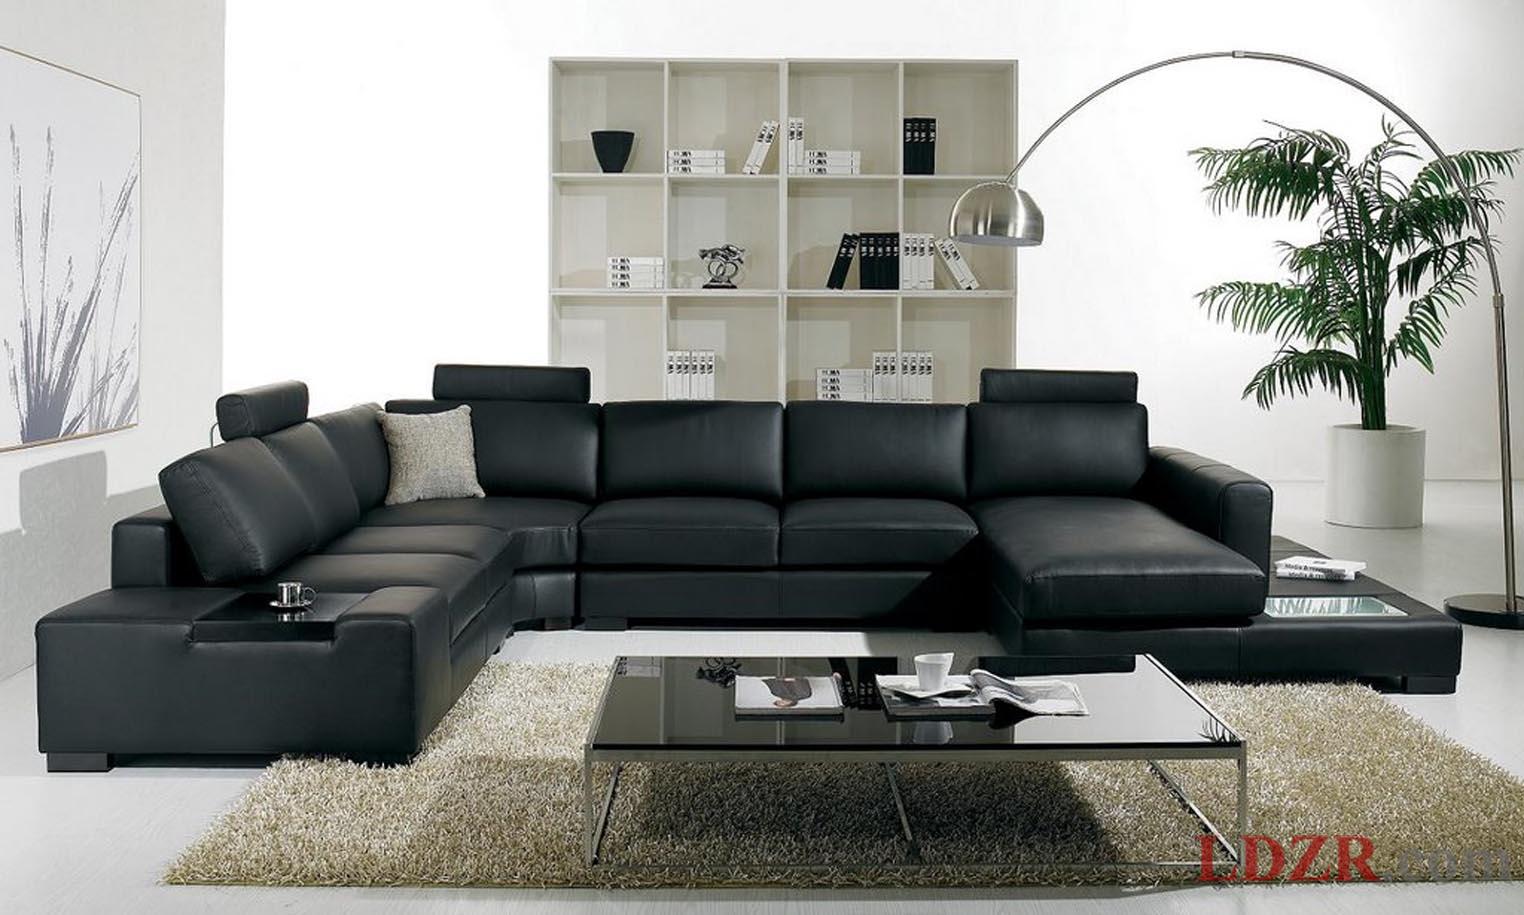 sofa for living room livingroom:home and living lovely room with black leather sofa interior  design brown MIKVNQT